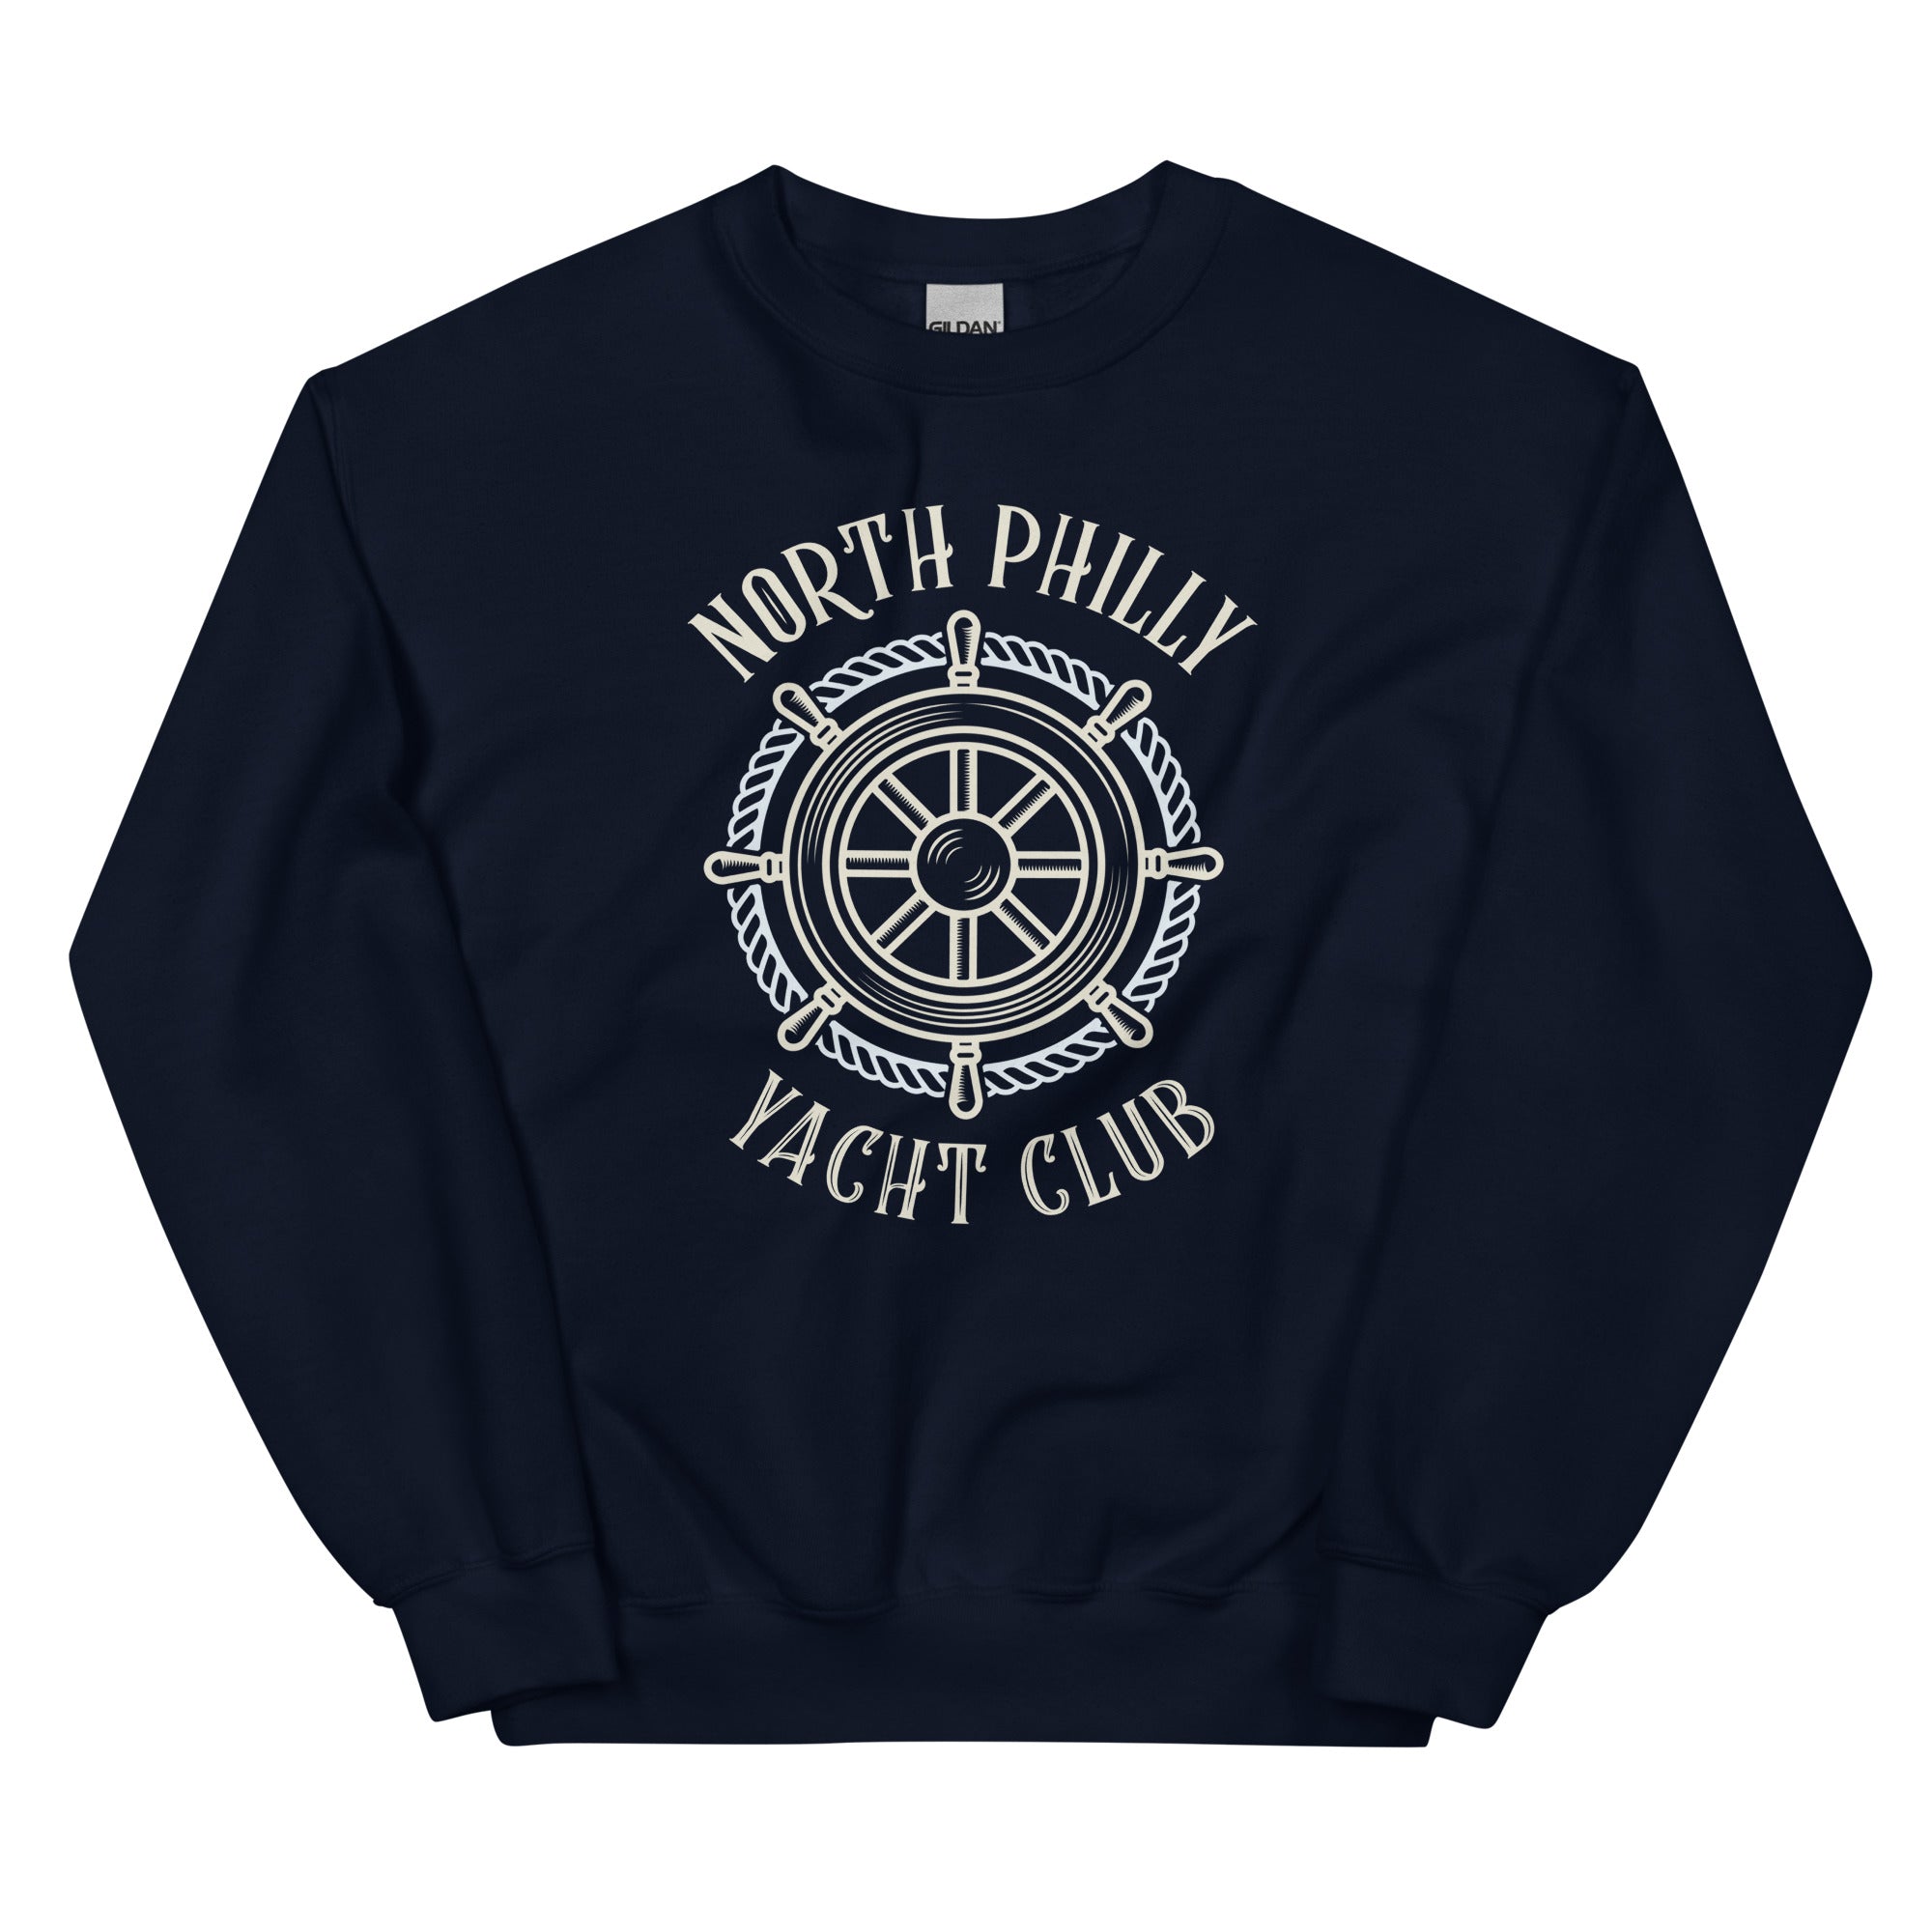 North Philly Philadelphia yacht club navy blue sweatshirt Phillygoat